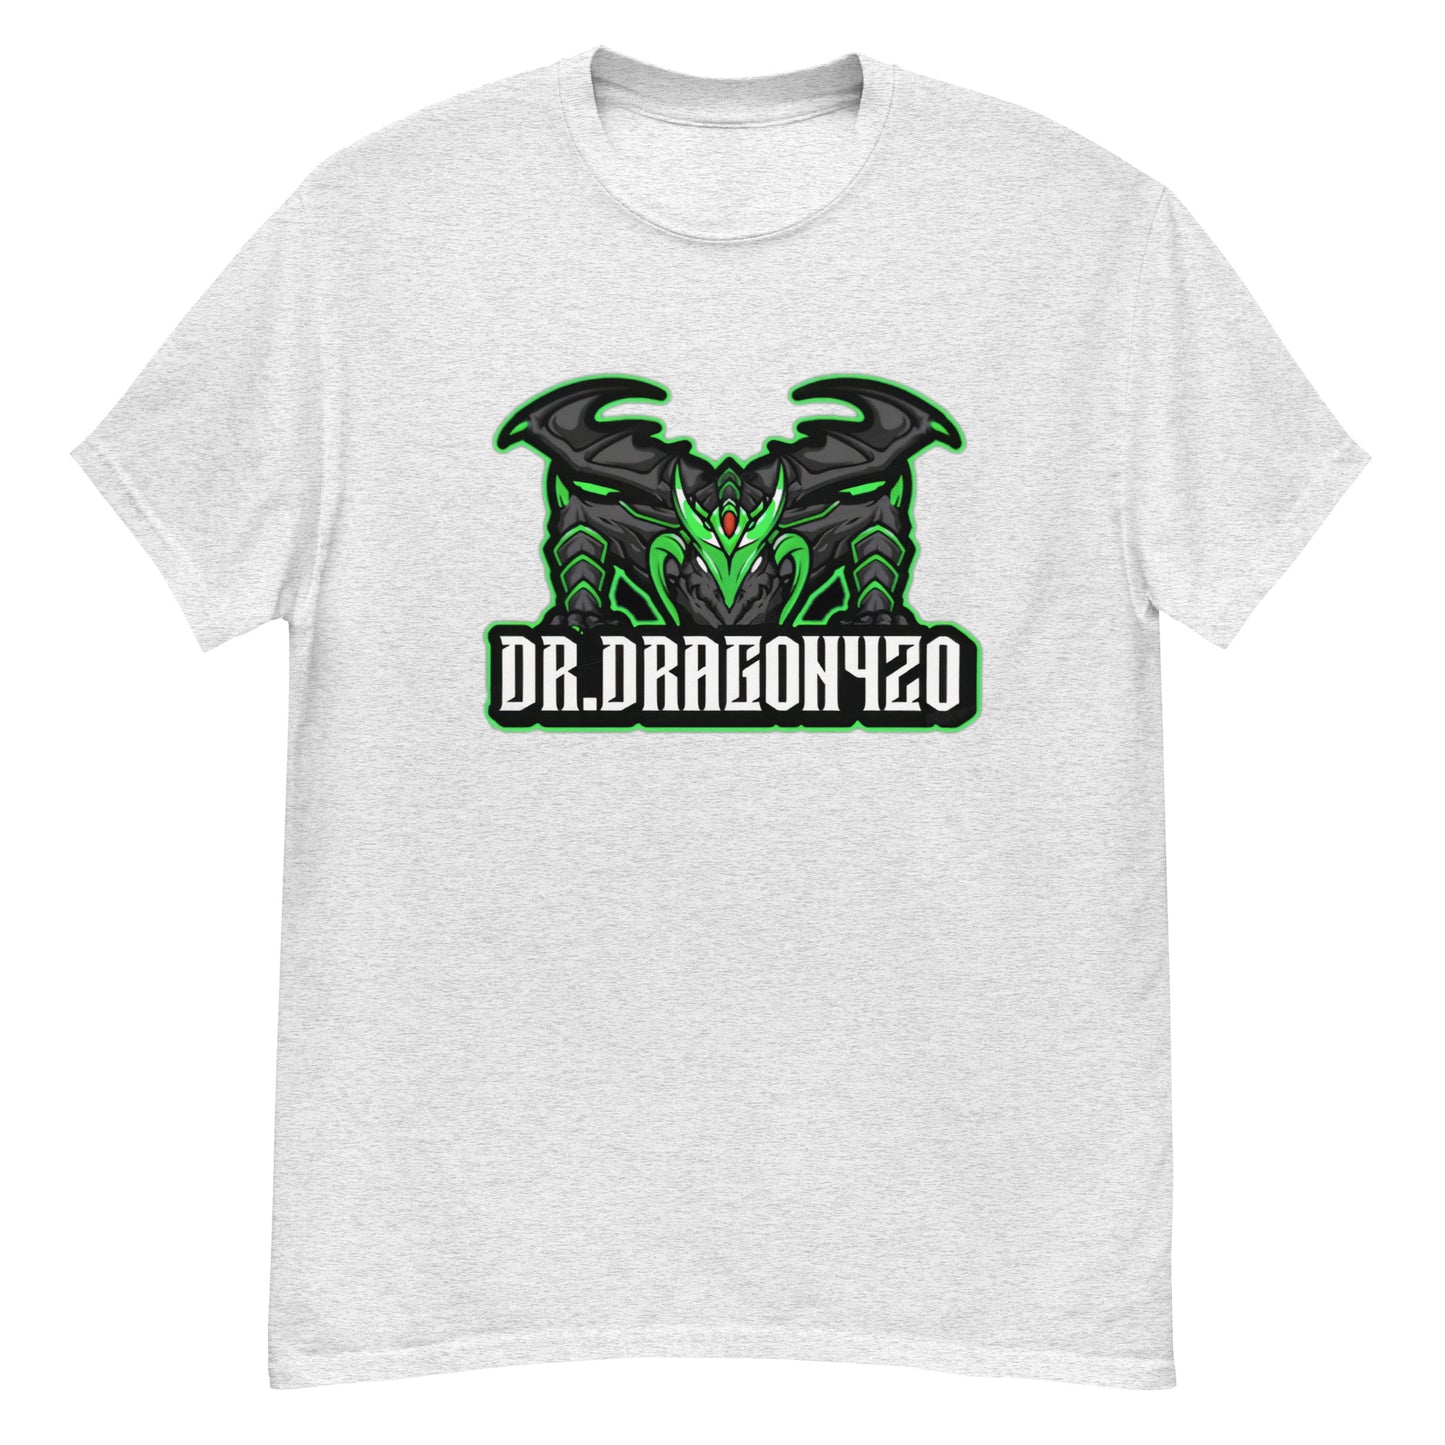 DrDragon420's Large Logo classic tee